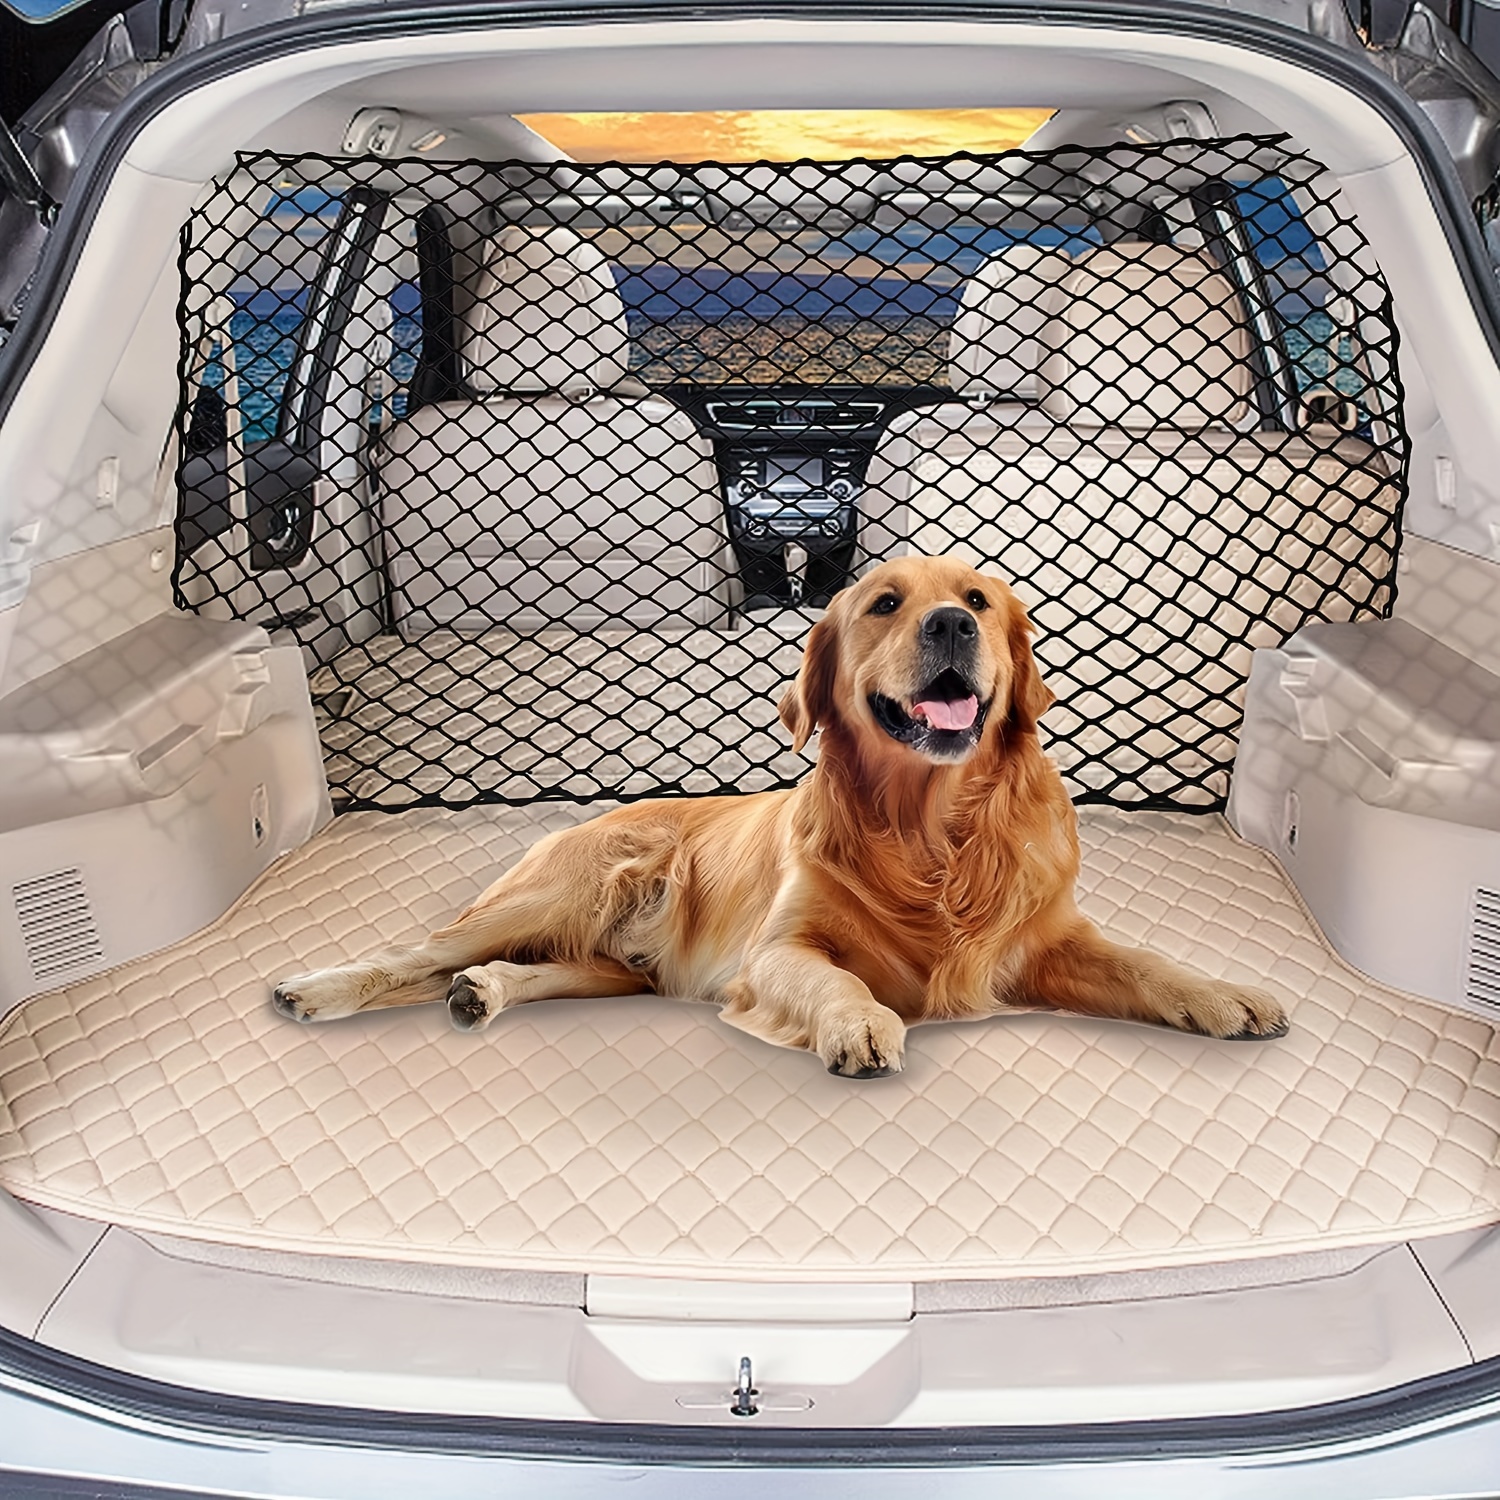 AMEIQ Car Organizer, Storage Bag Between Front Seats, Car Purse Holder,  Handbag Tissue Holder, Dog Pet Barrier, Pocket Container, Black Leather